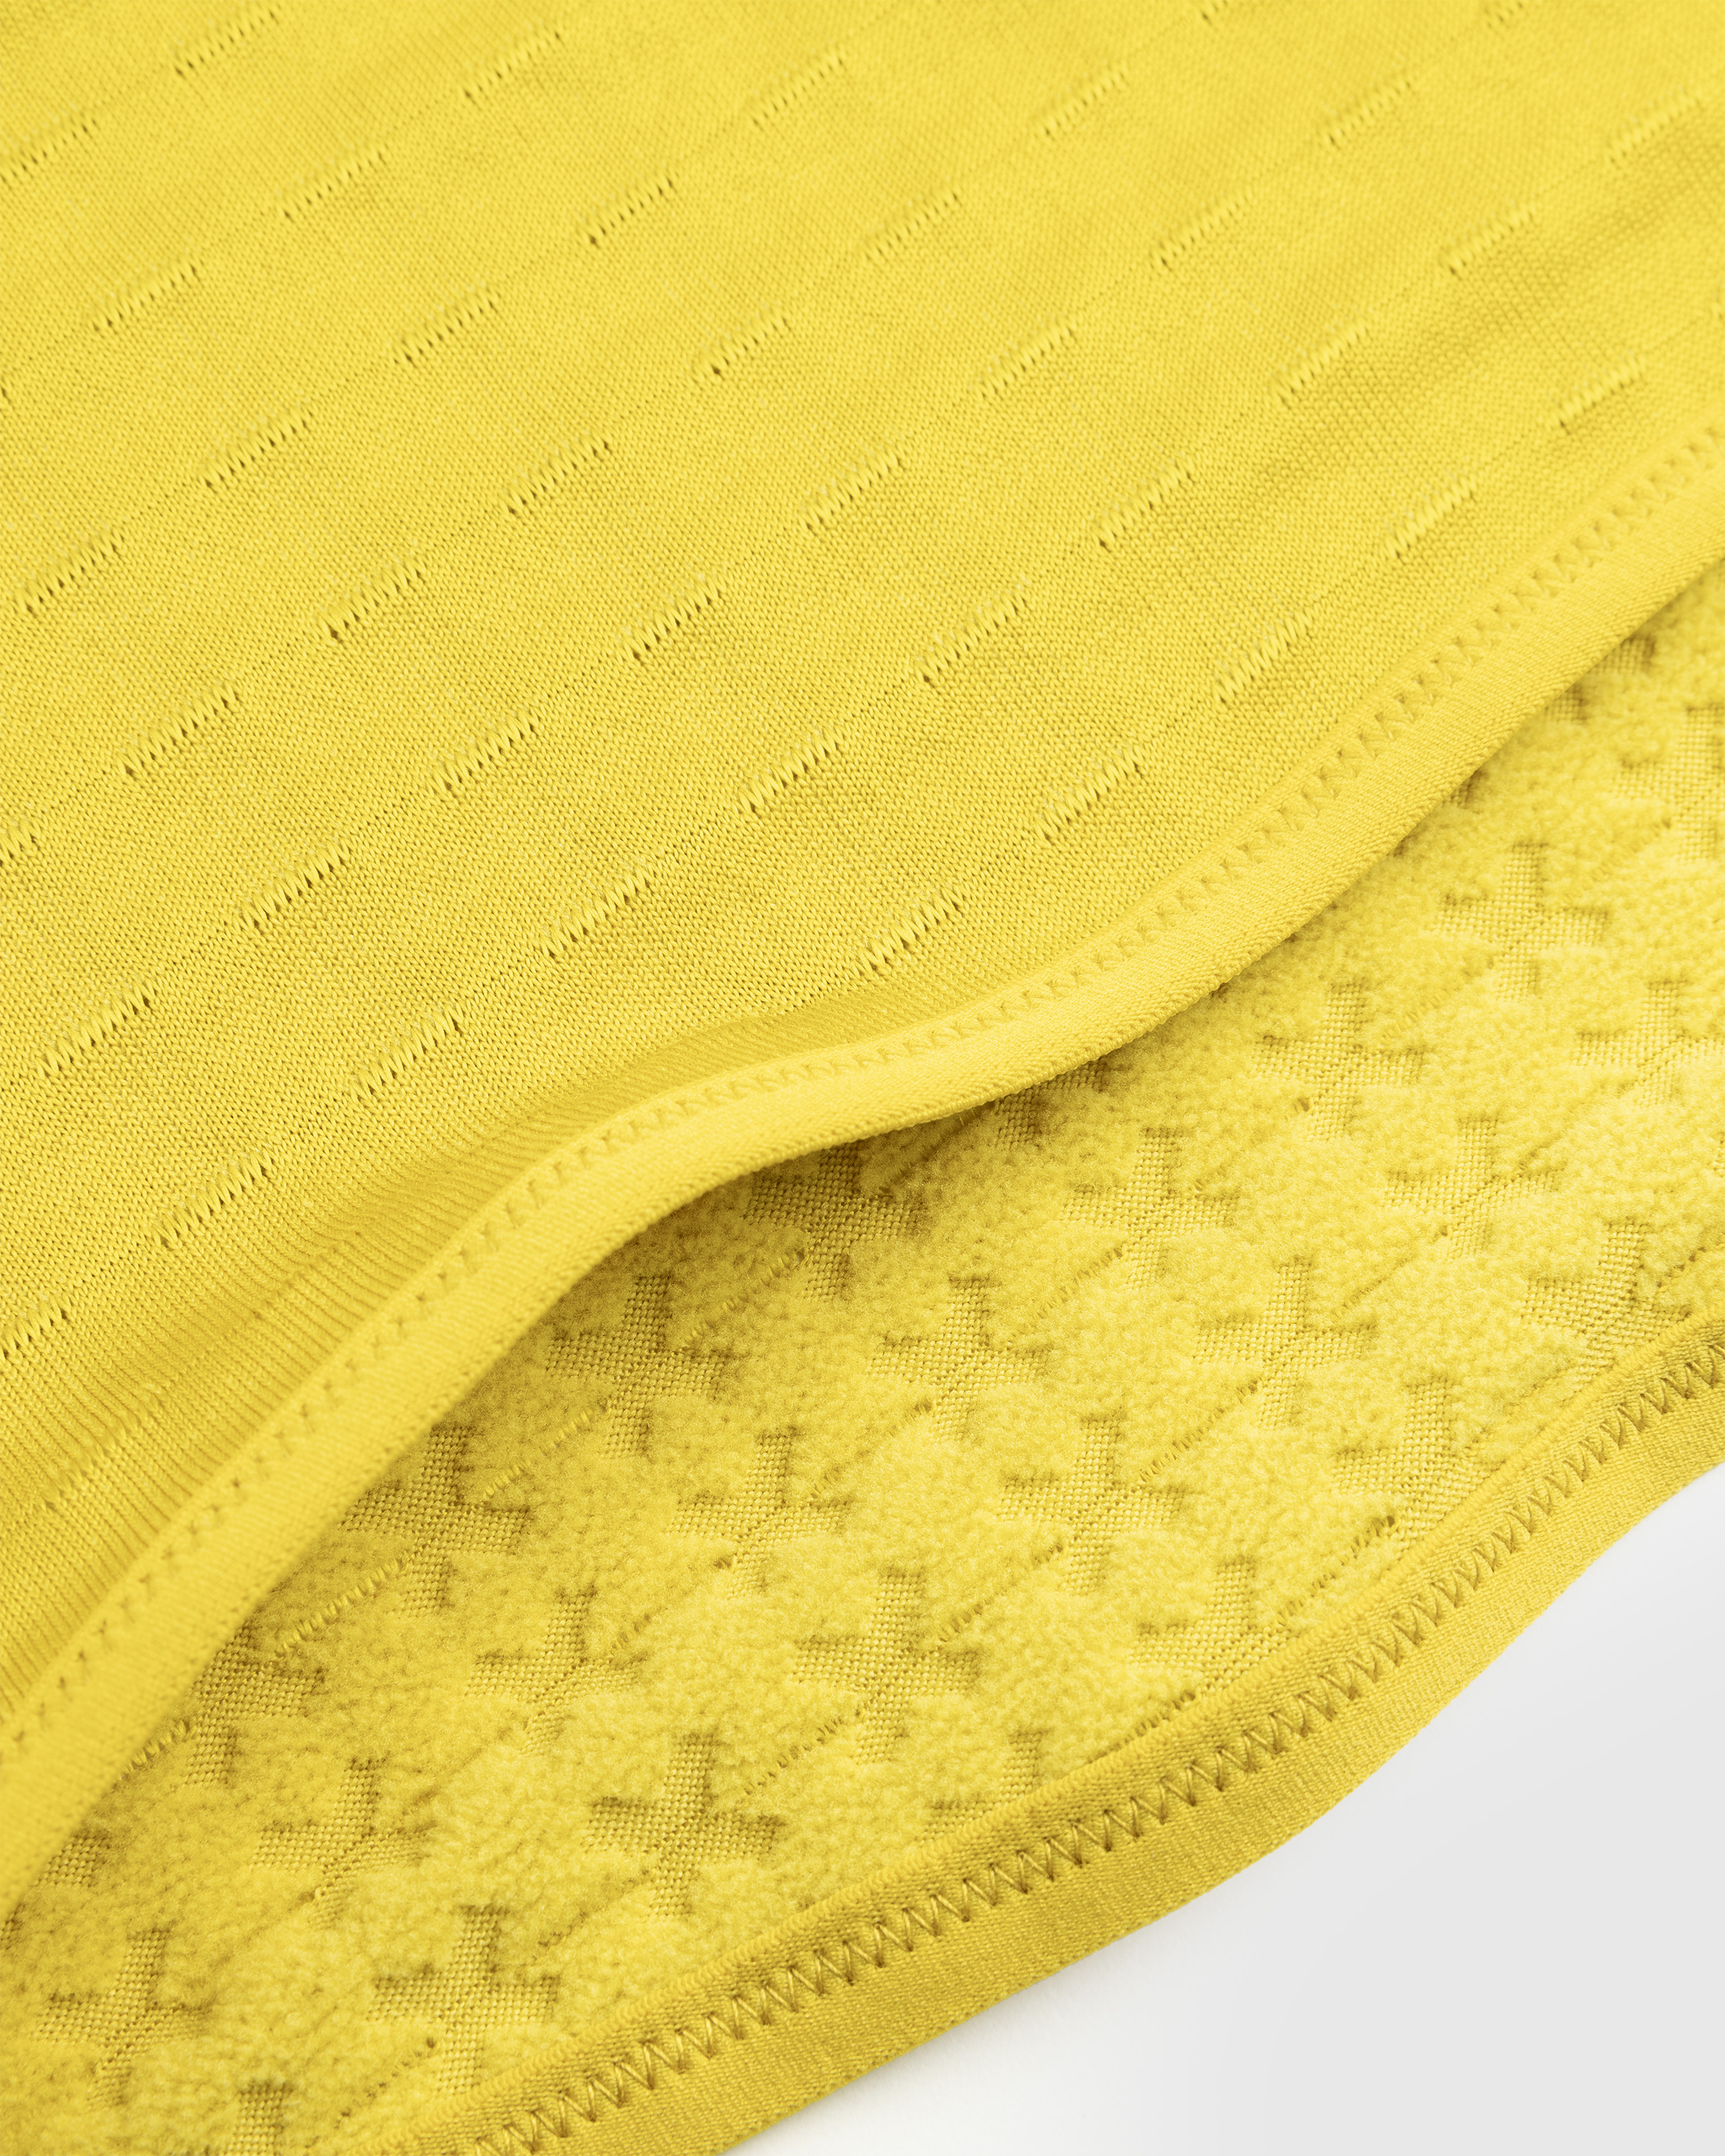 Nike x Patta – Half-Zip Long-Sleeve Top Saffron Quartz - Zip-Ups - Green - Image 8